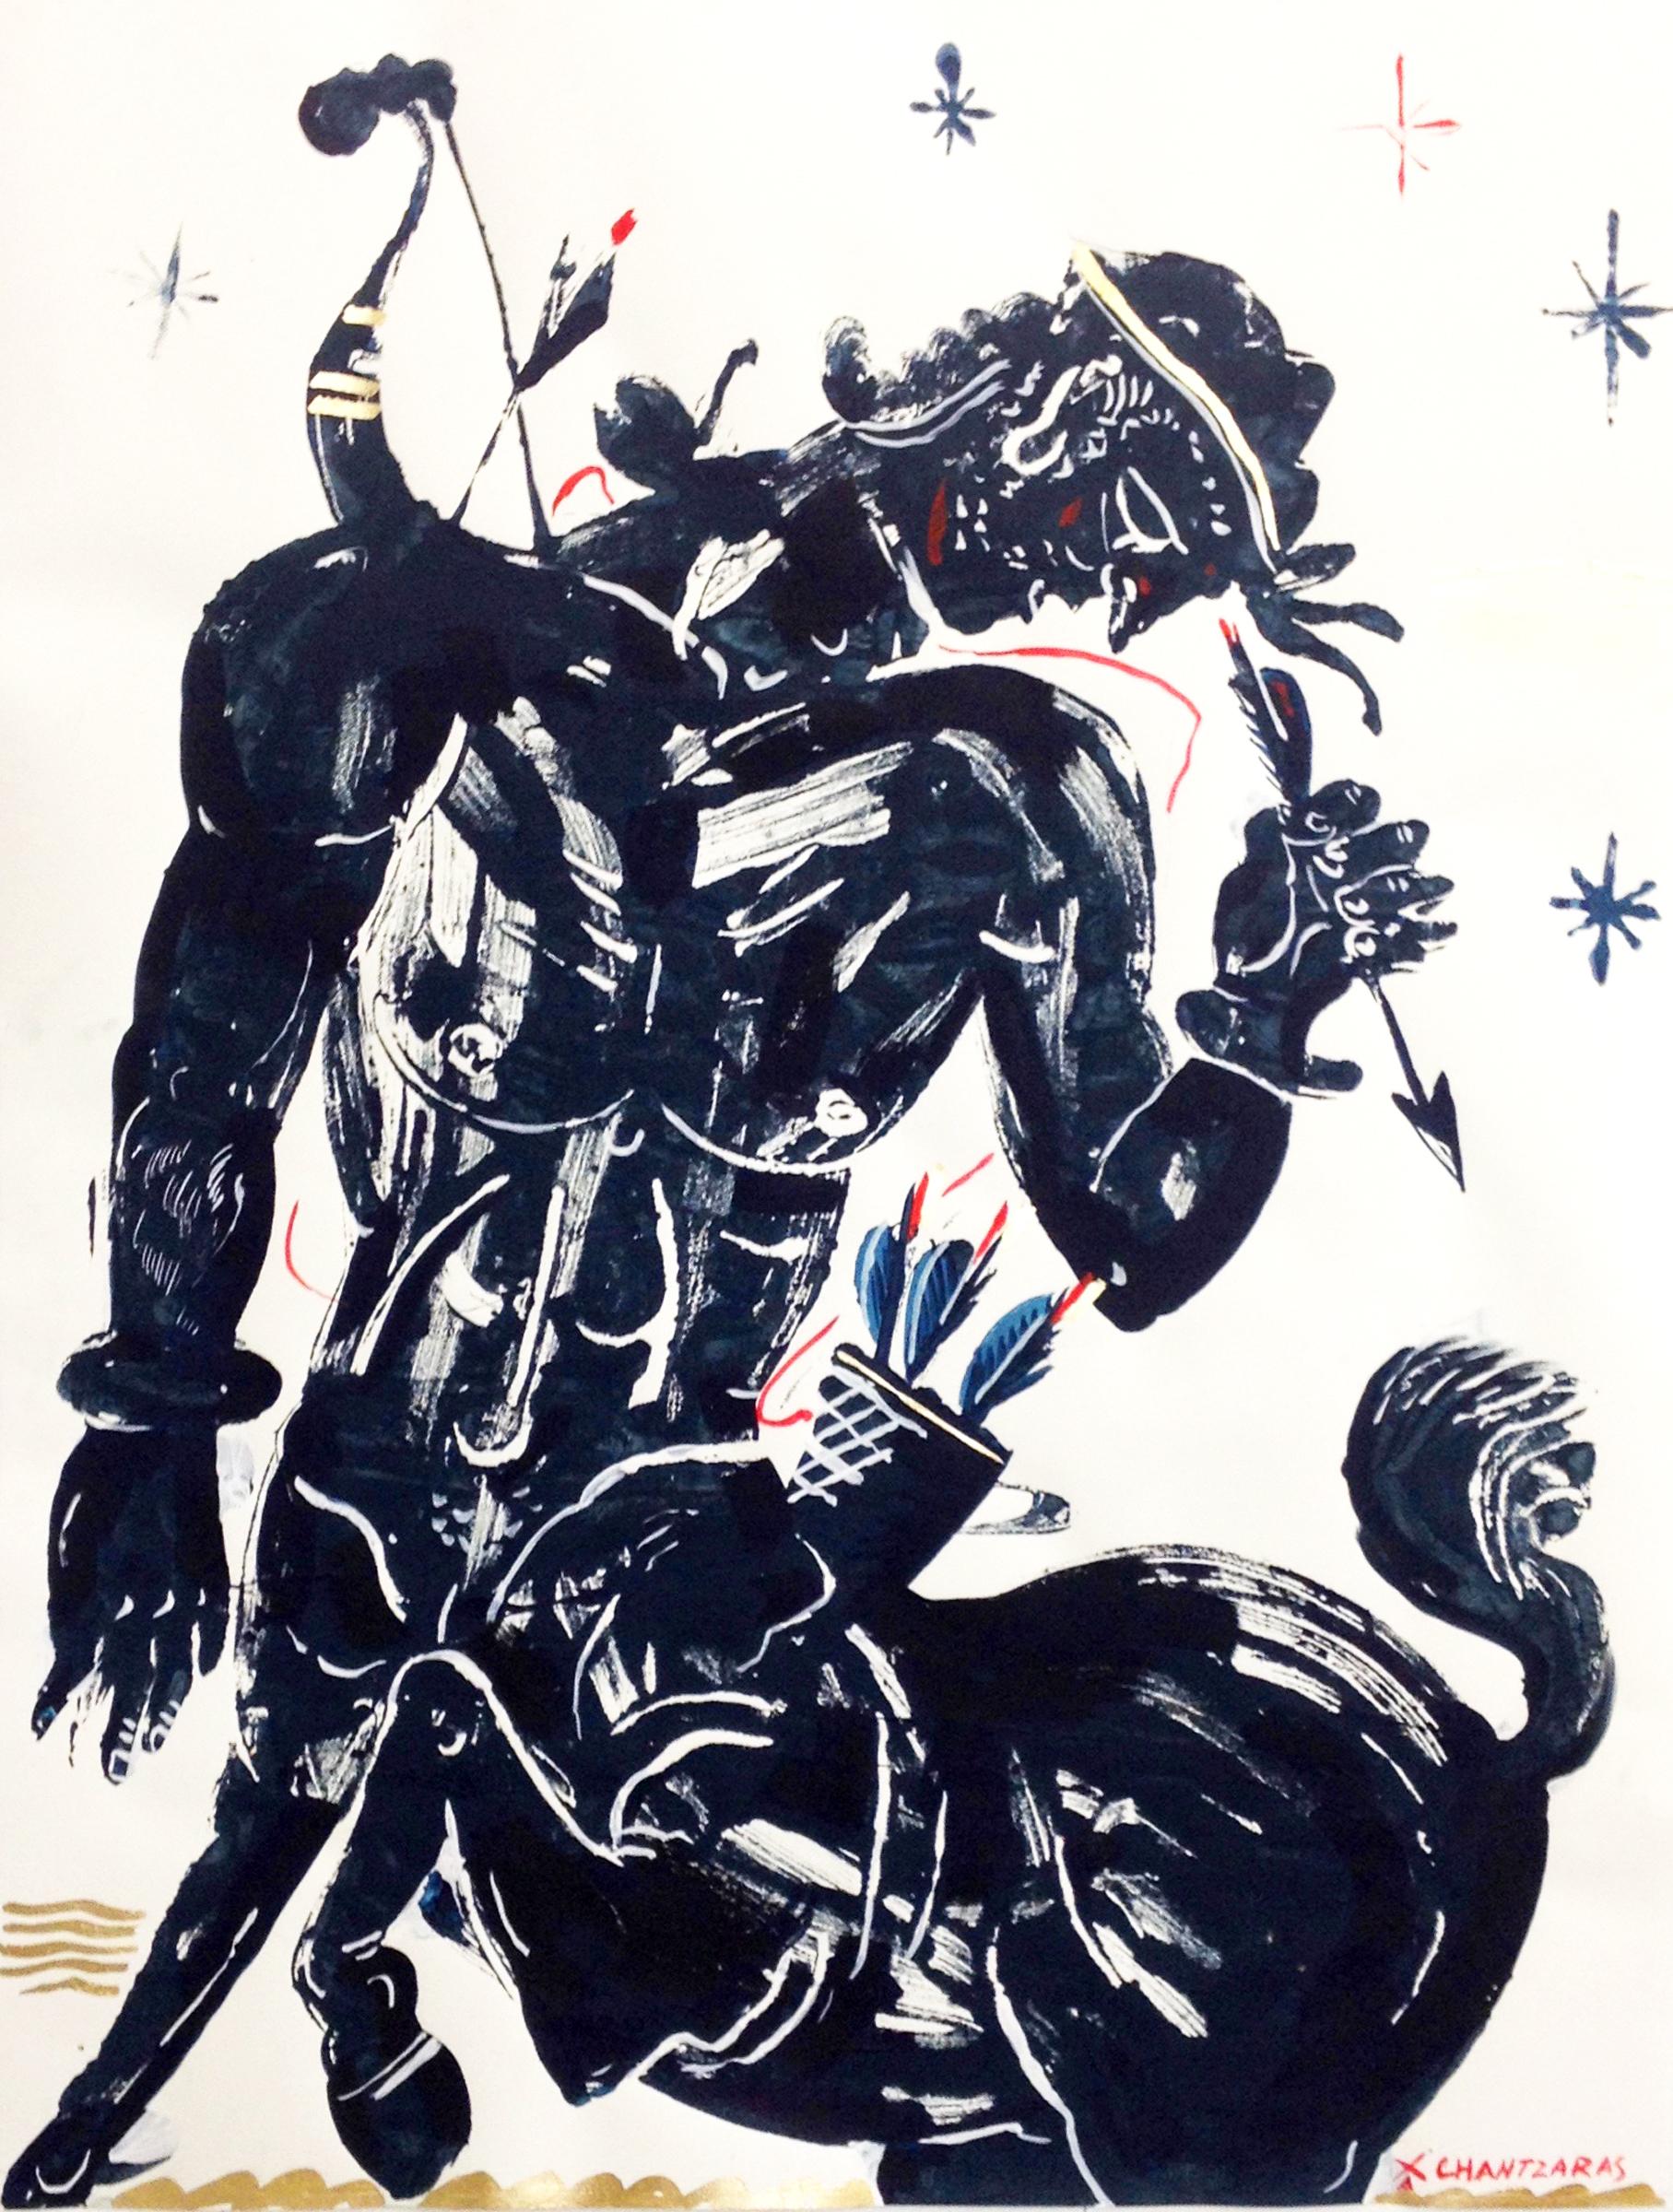 Pholus Centaur, Mythological Male Figure, black, red and gold painting on paper - Art by Apostolos Chantzaras